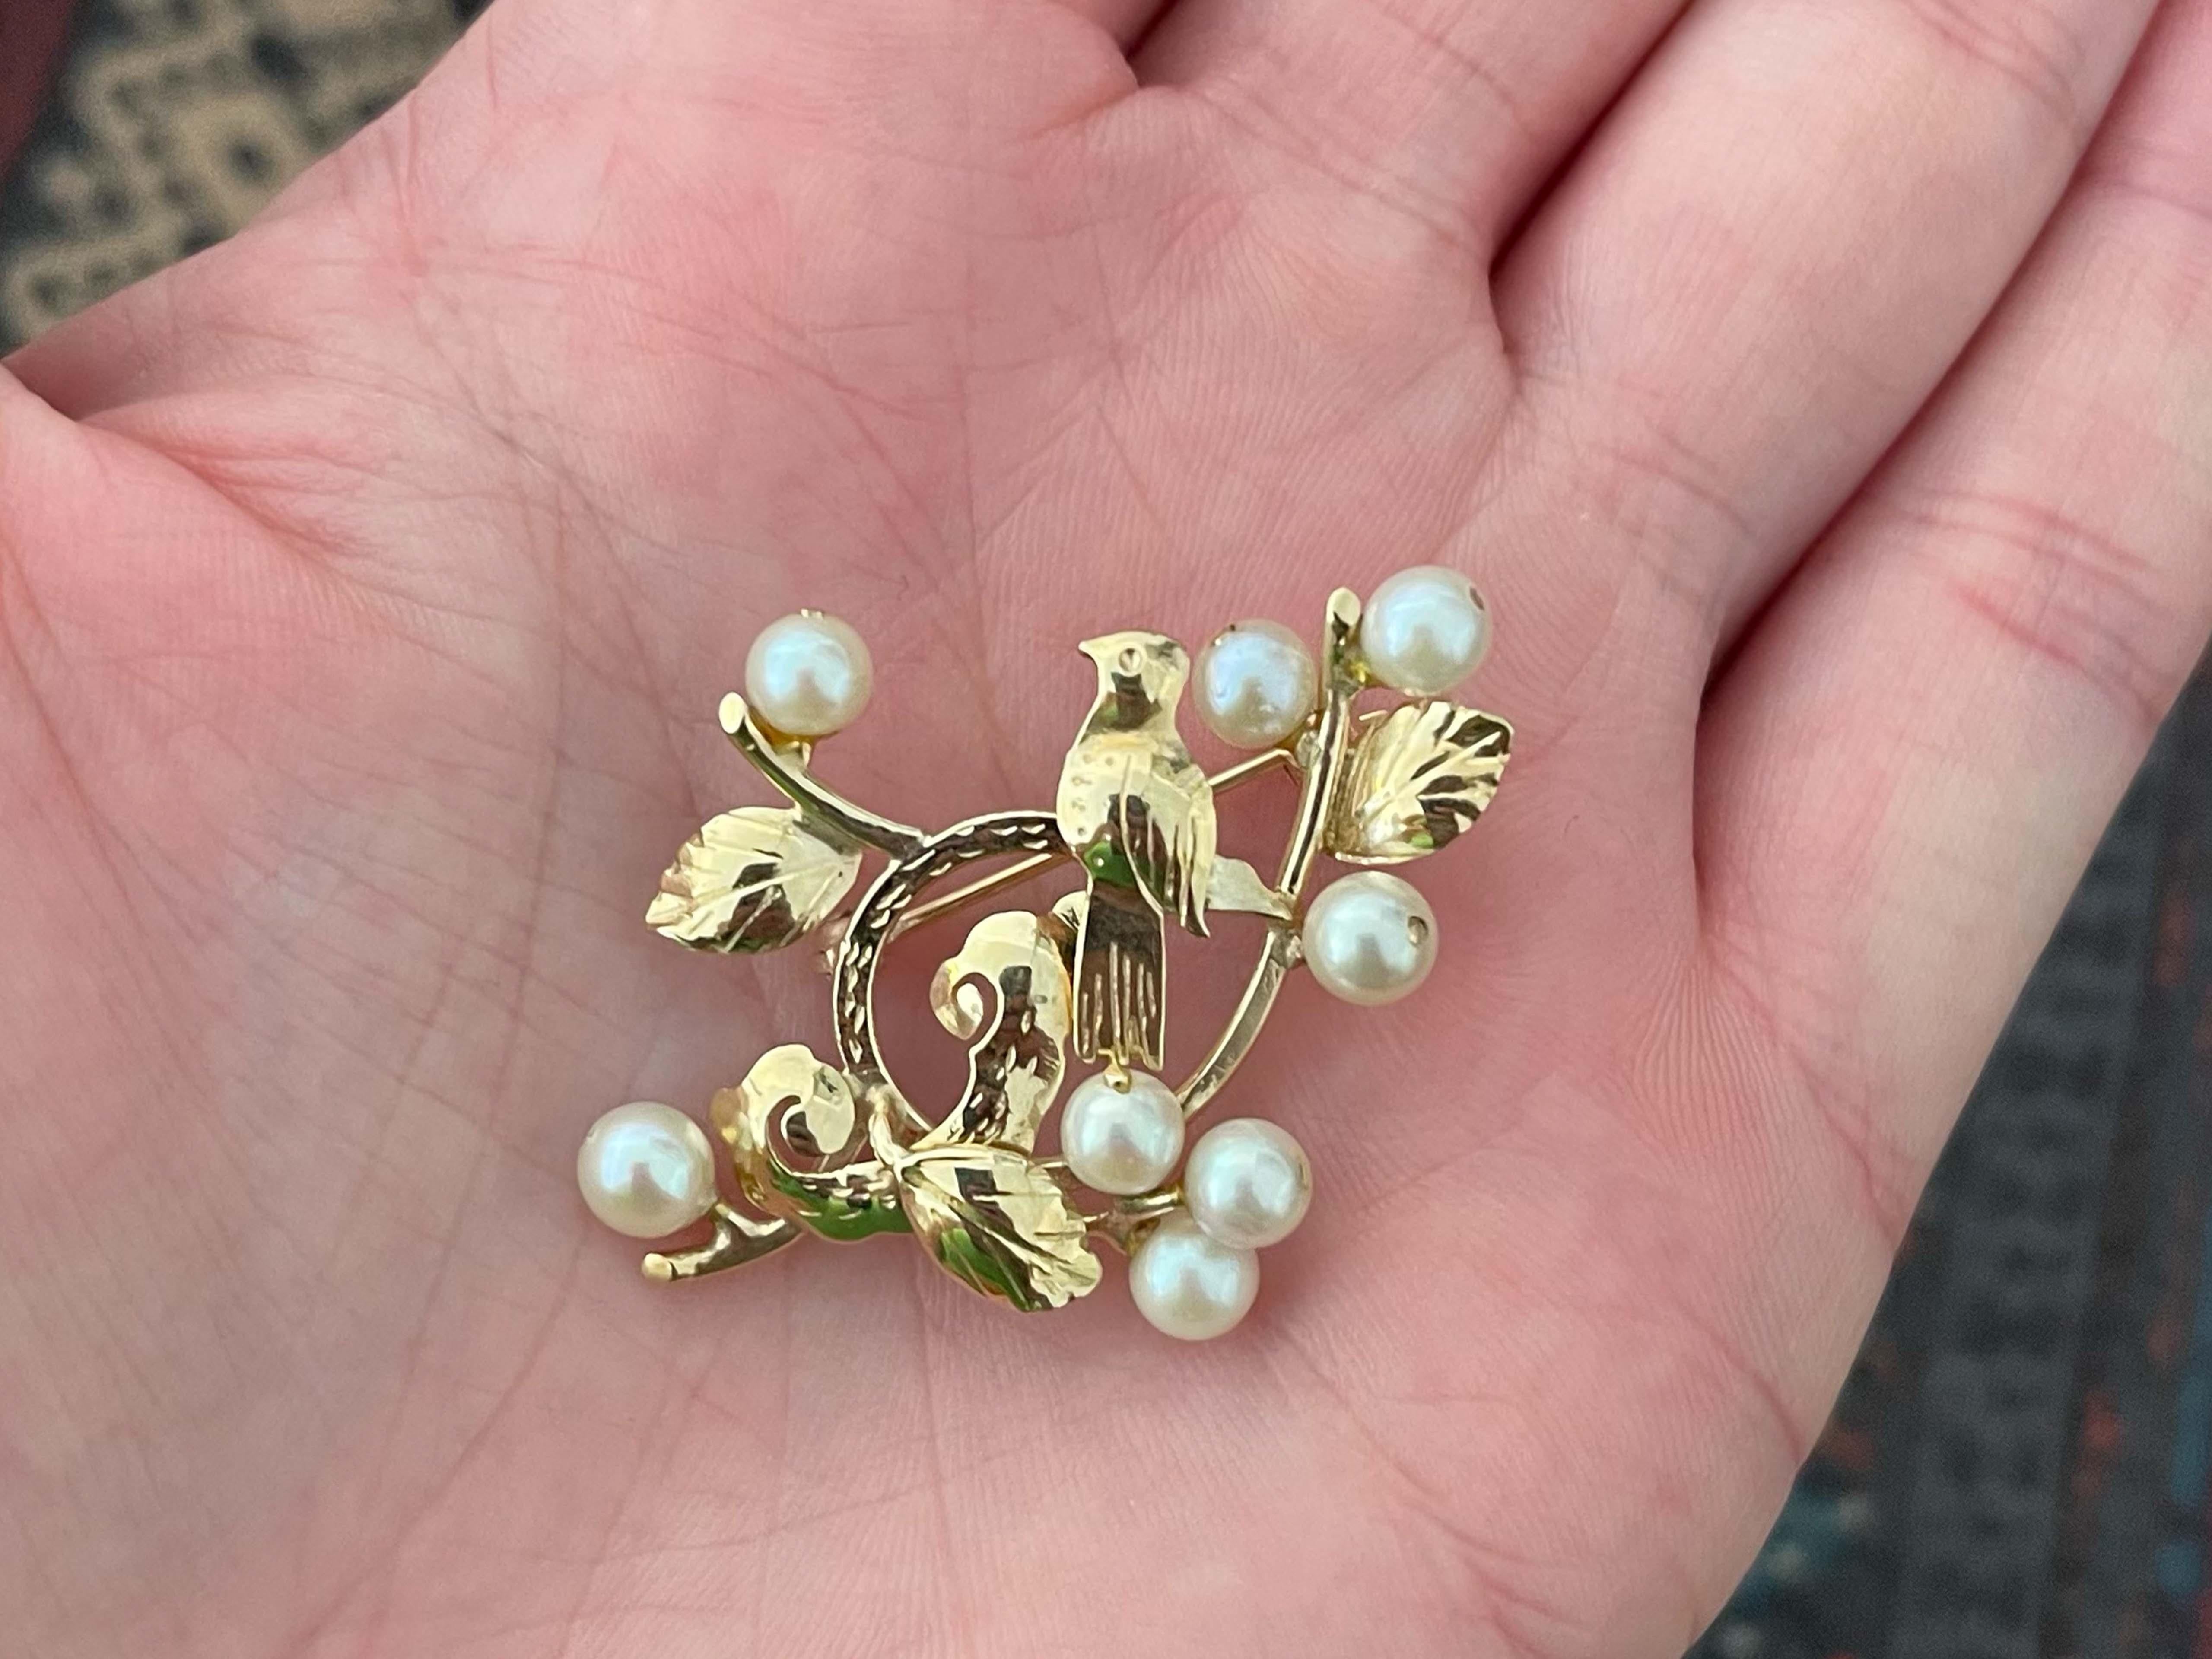 Brooch Specifications:

Designer: Ming's

Metal: 14k Yellow Gold
​
​Pearls: Akoya Pearls

Total Weight: 5.1 Grams

Brooch Measurements: 1.5